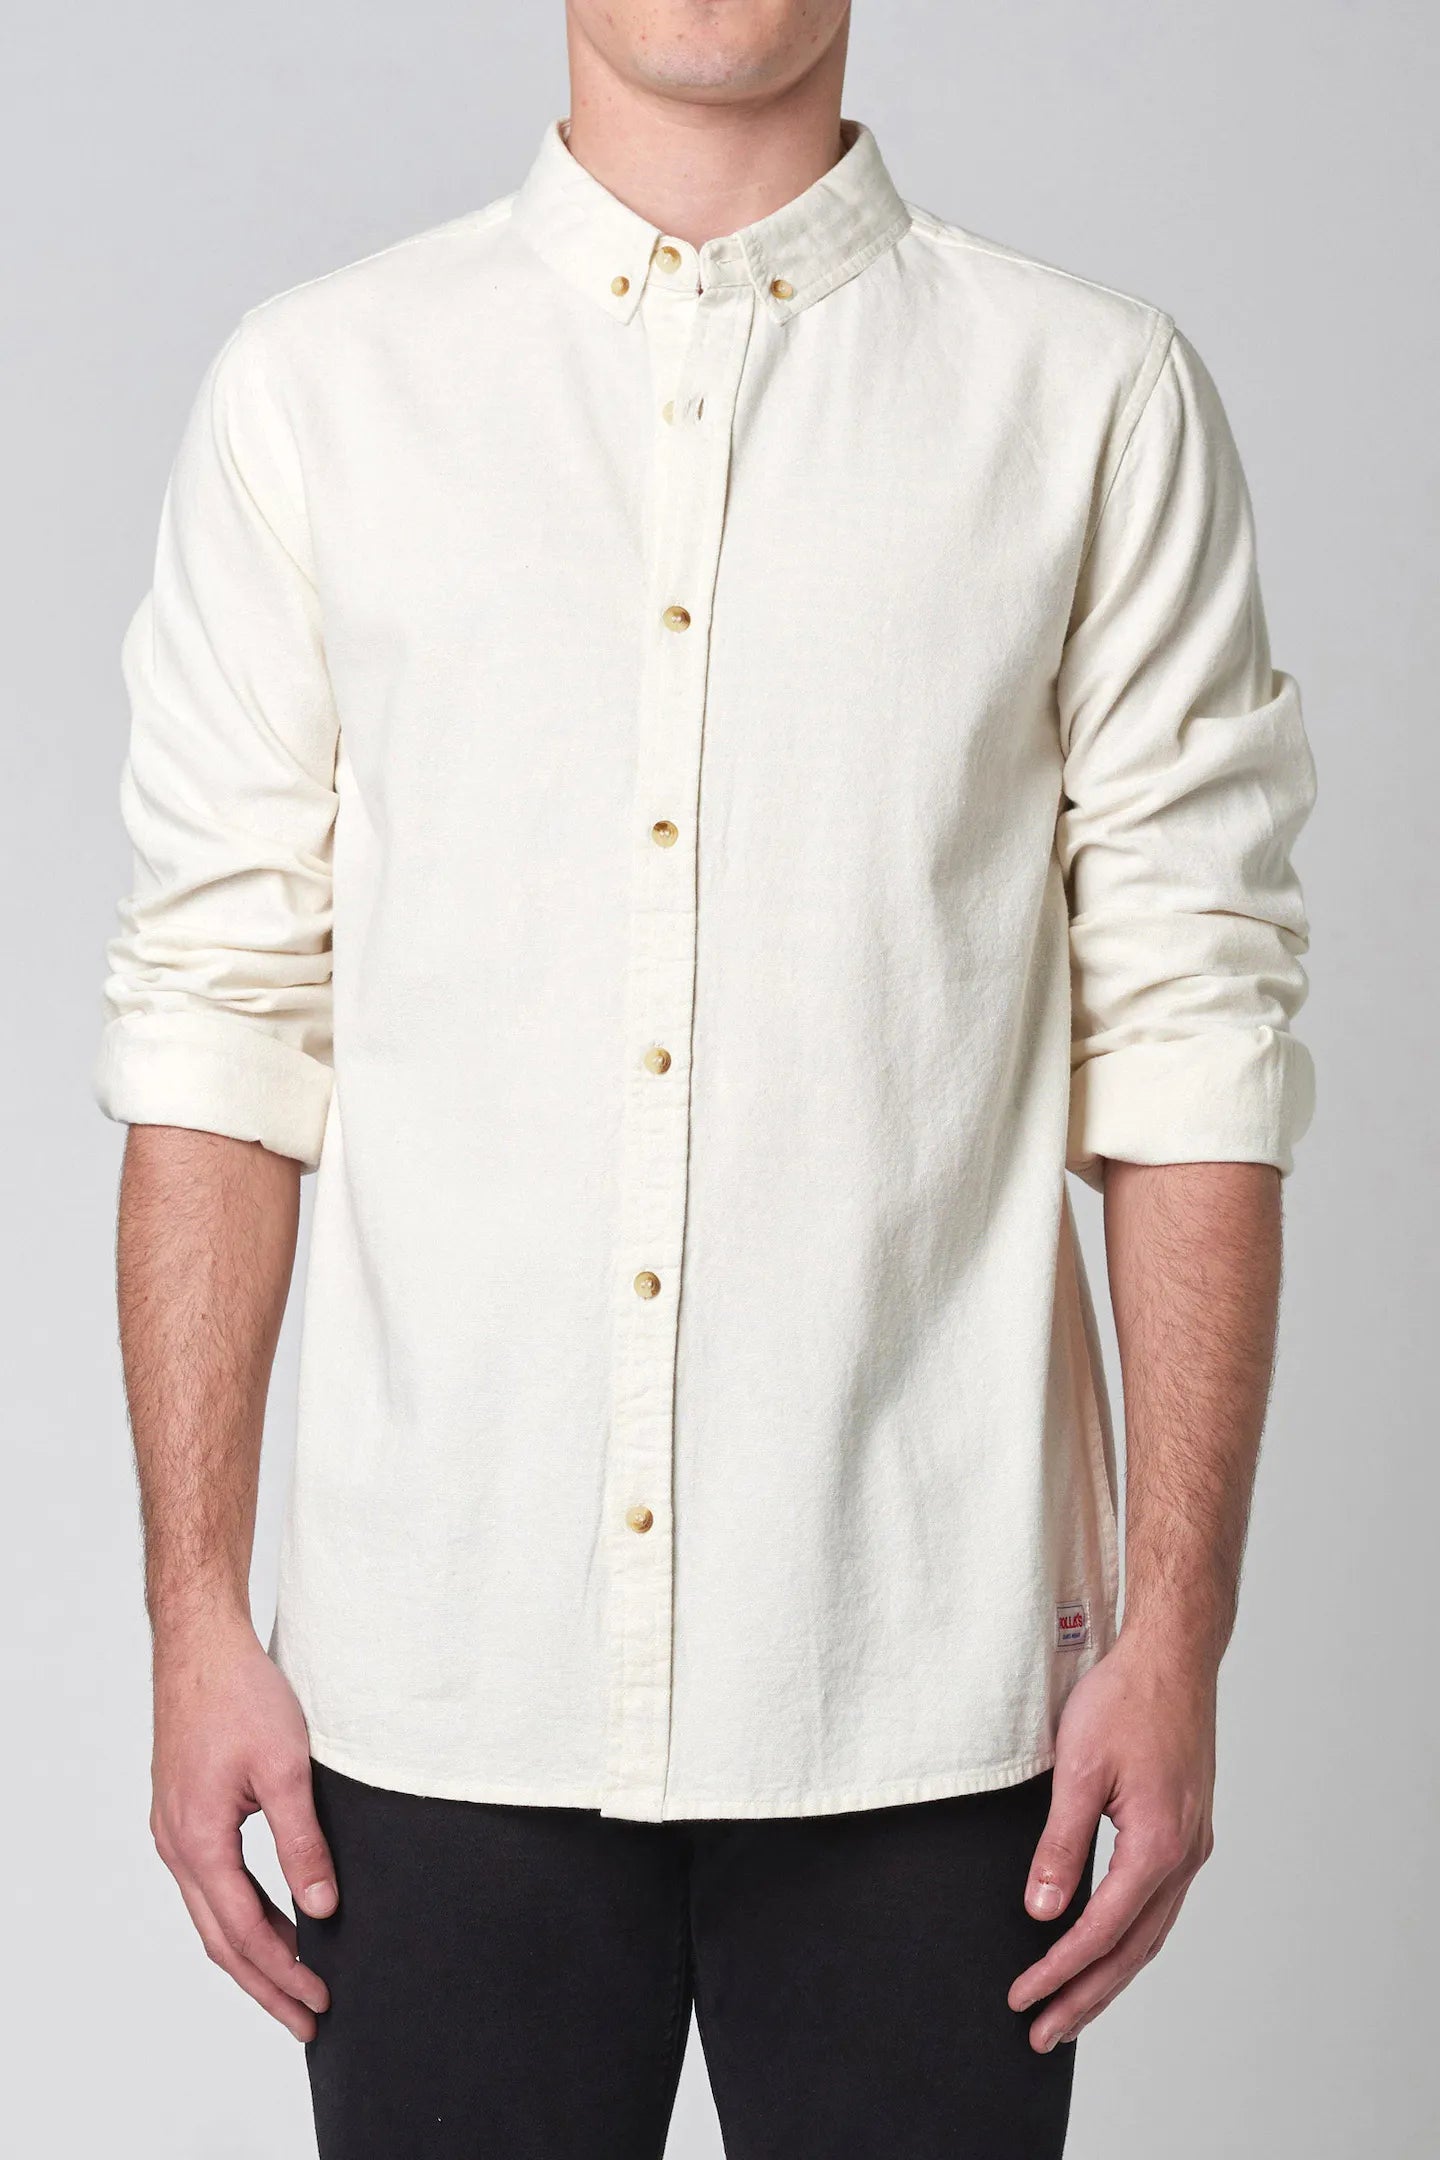 ROLLAS // Men At Work OXFORD Shirt WHITE